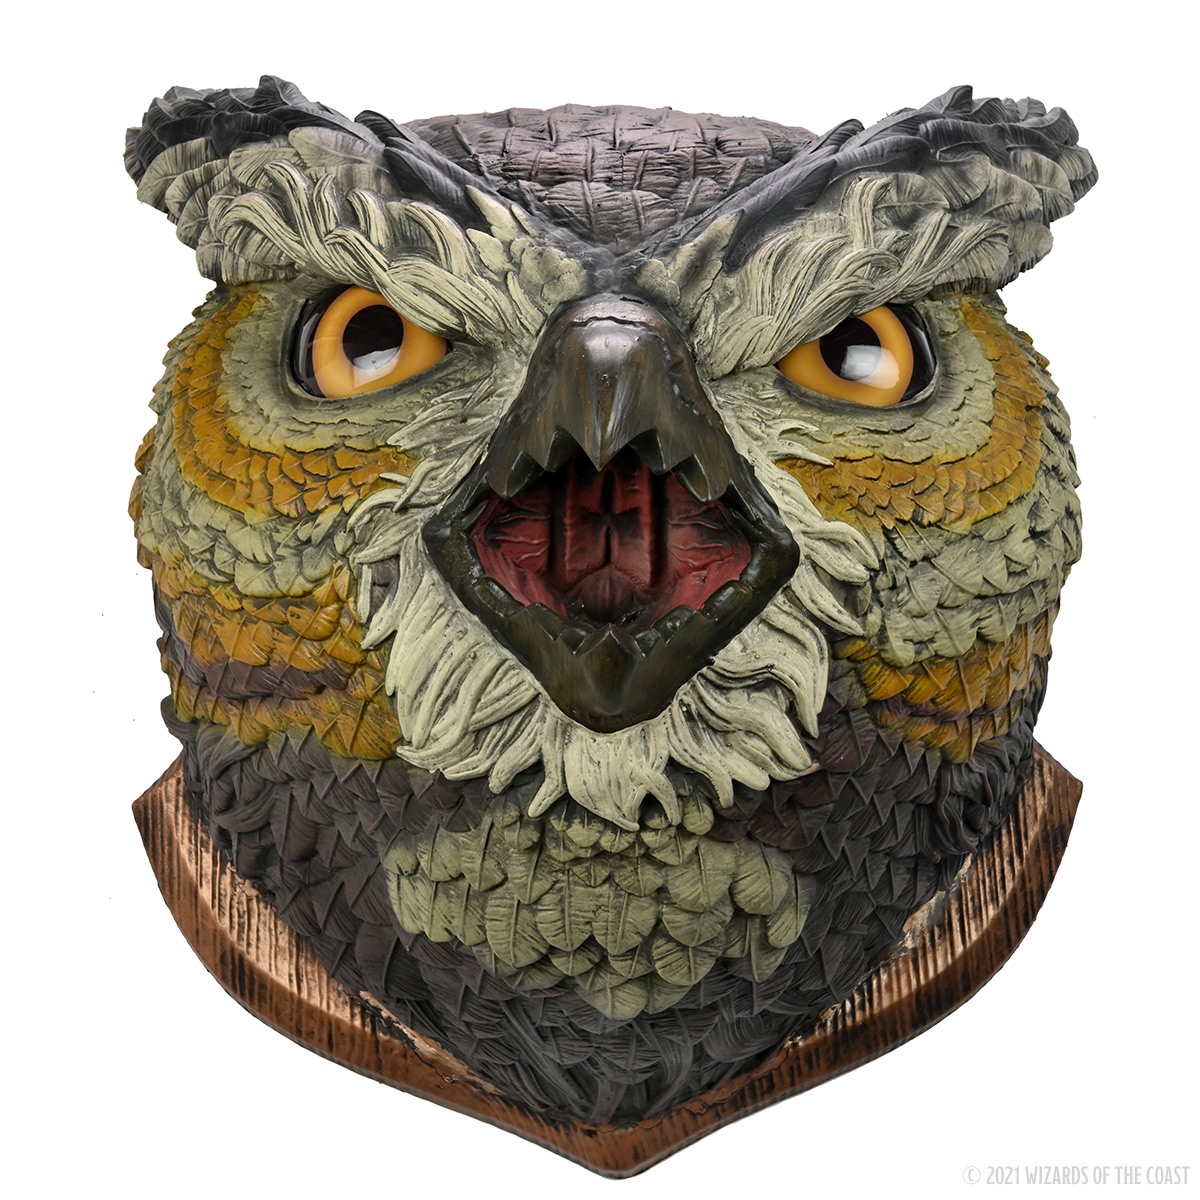 Dungeons & Dragons Owlbear Trophy Plaque-1641462981.jpg